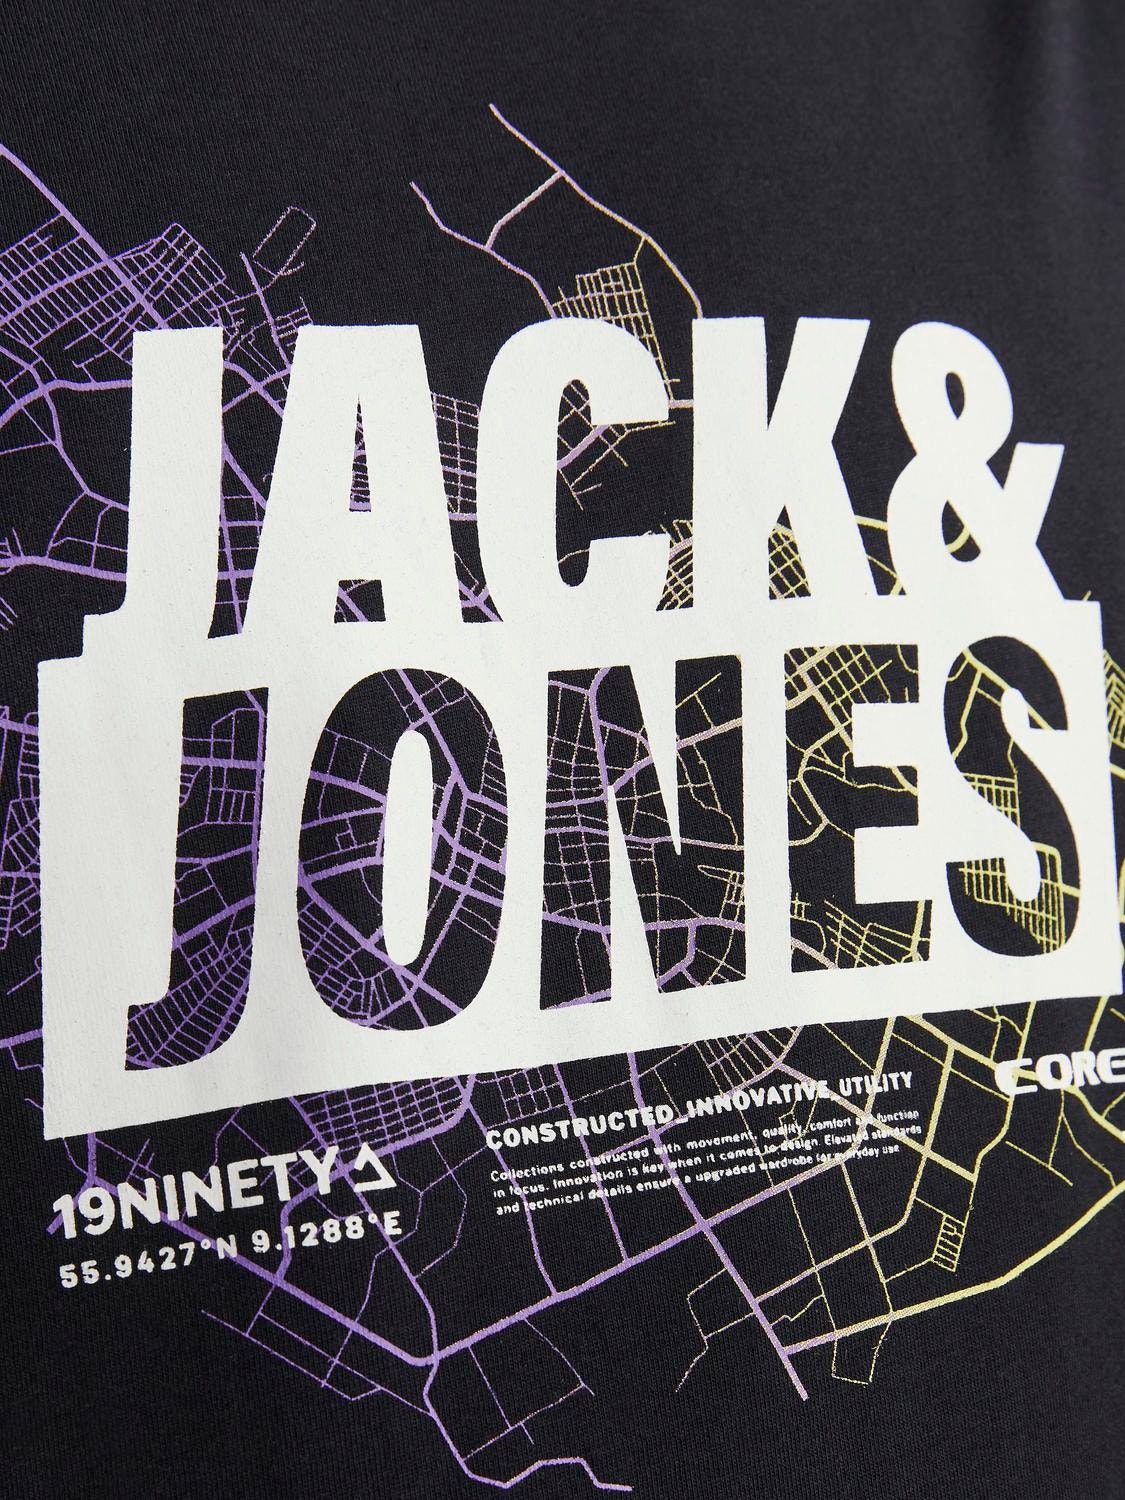 Jack & Jones Printed Crew neck T-shirt -Black - 12252376